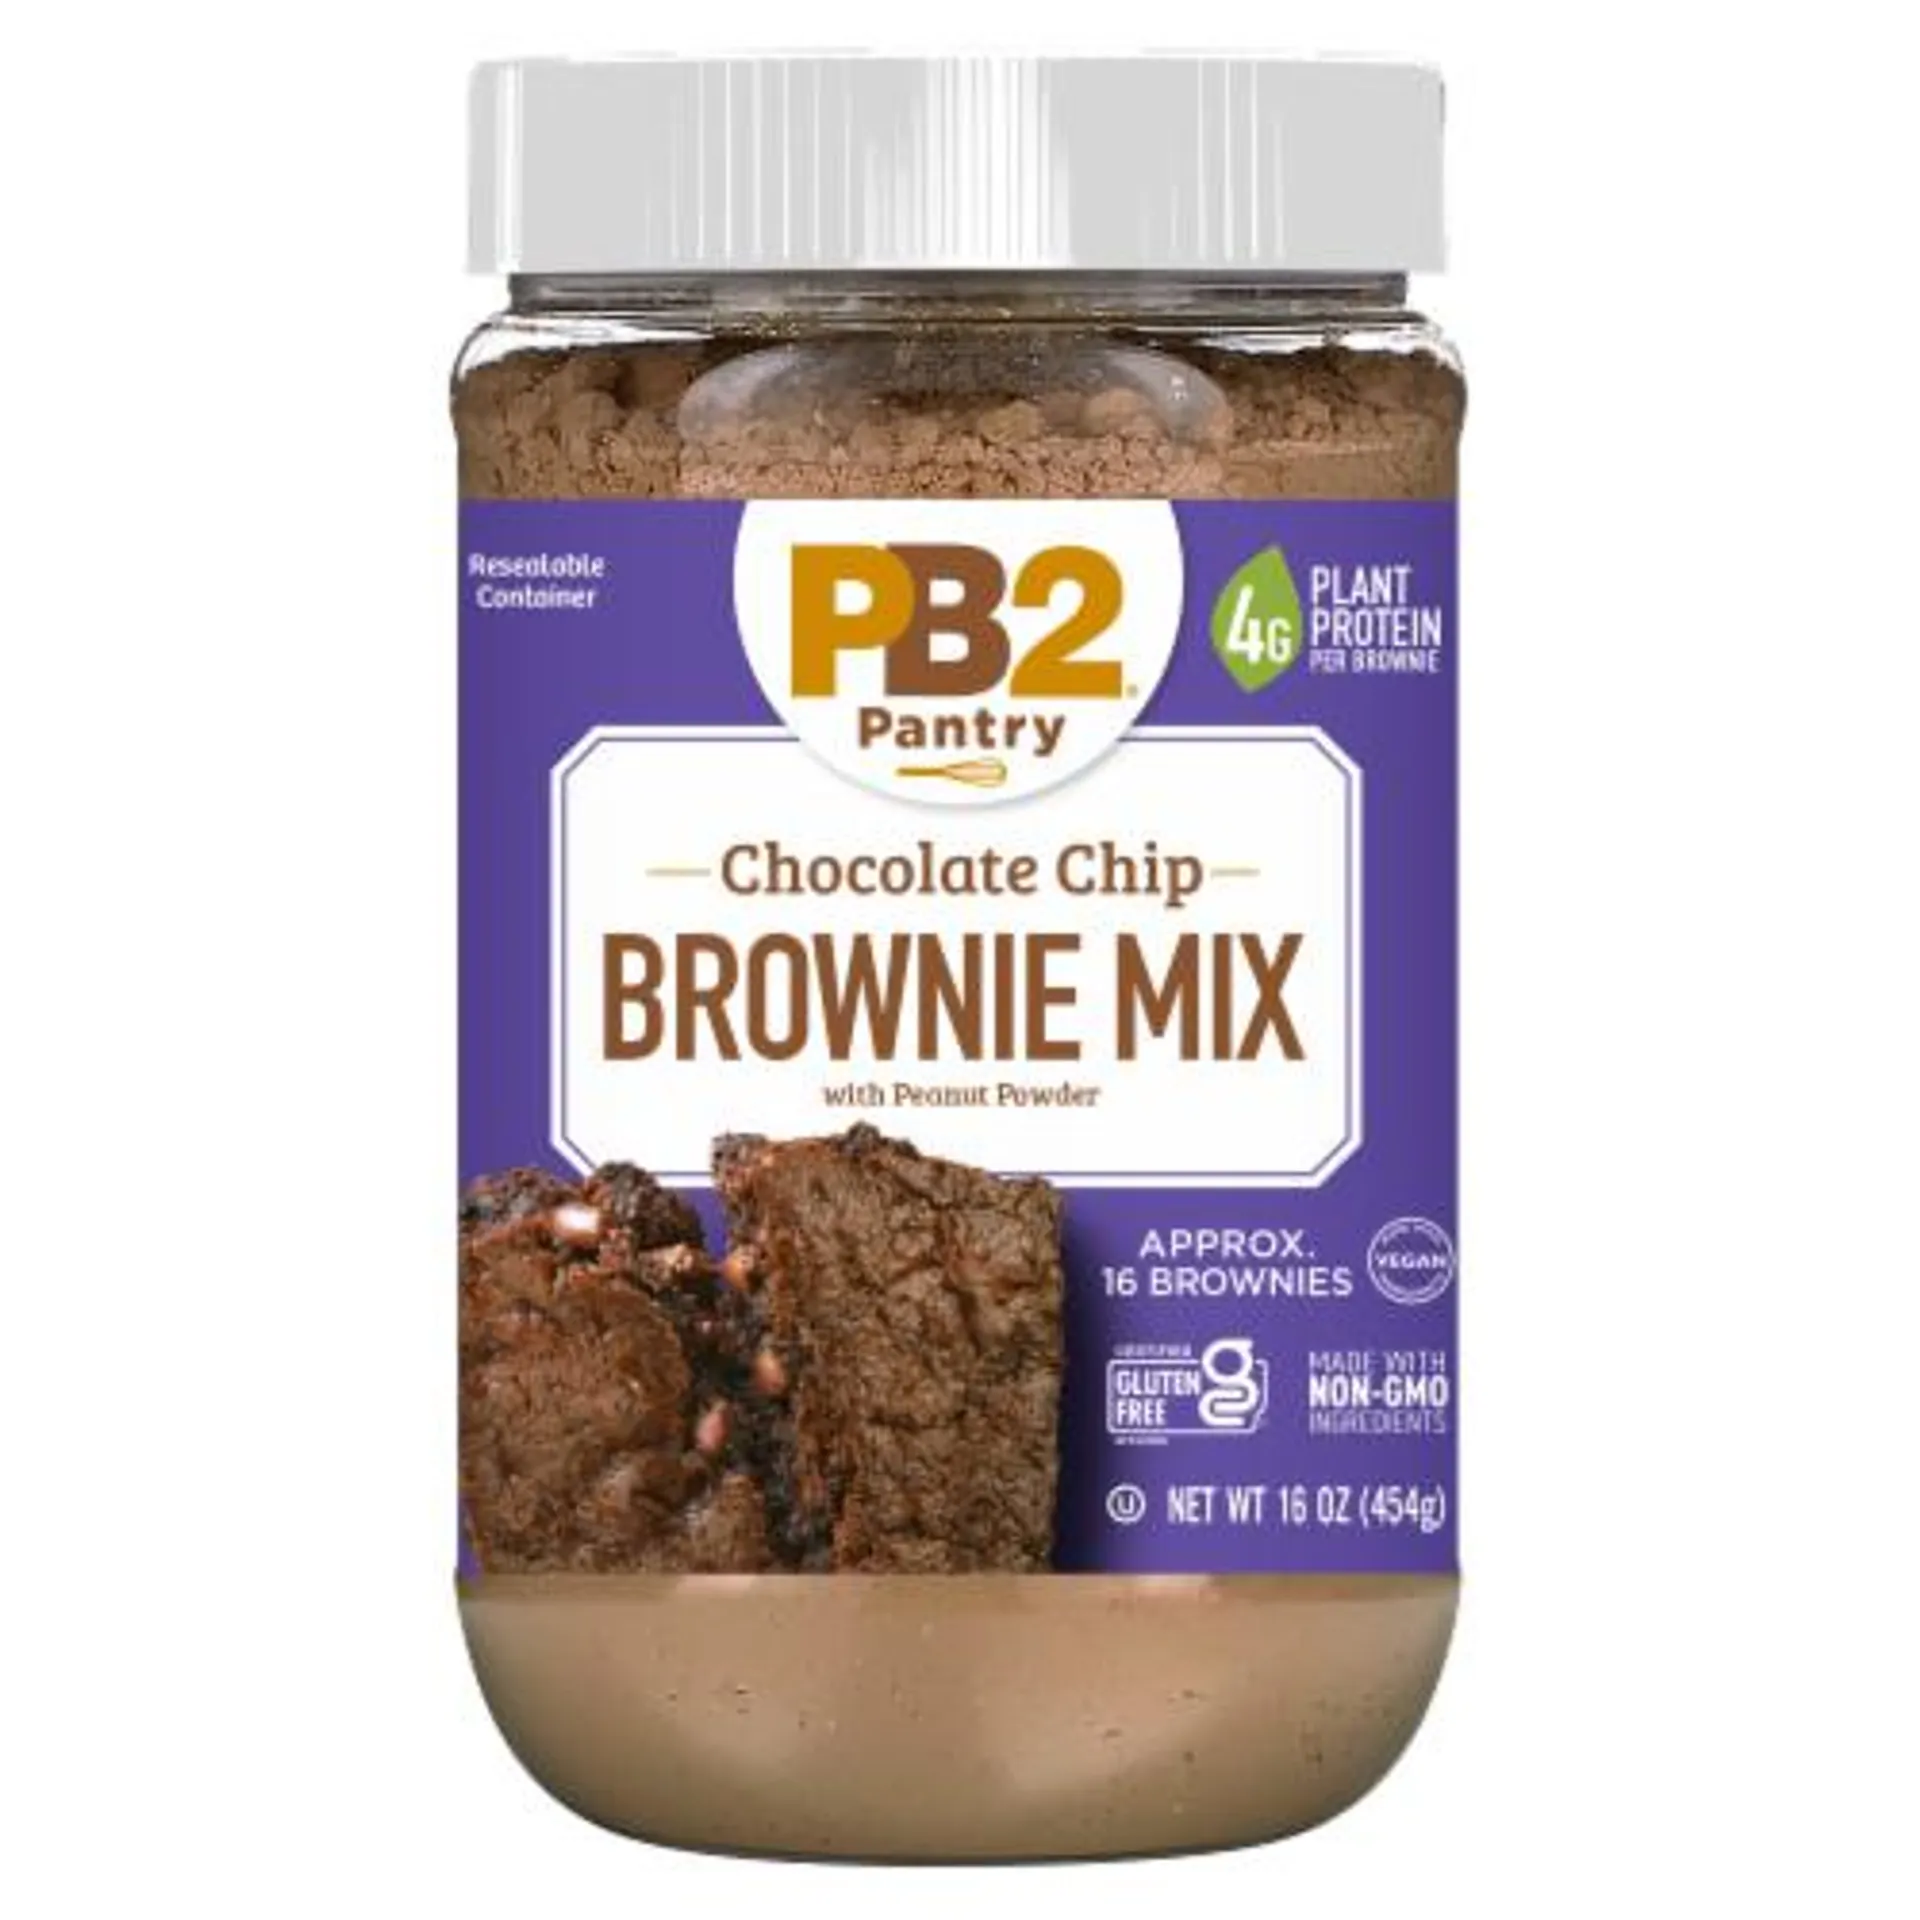 PB2® Pantry Chocolate Chip with Peanut Powder Brownie Mix